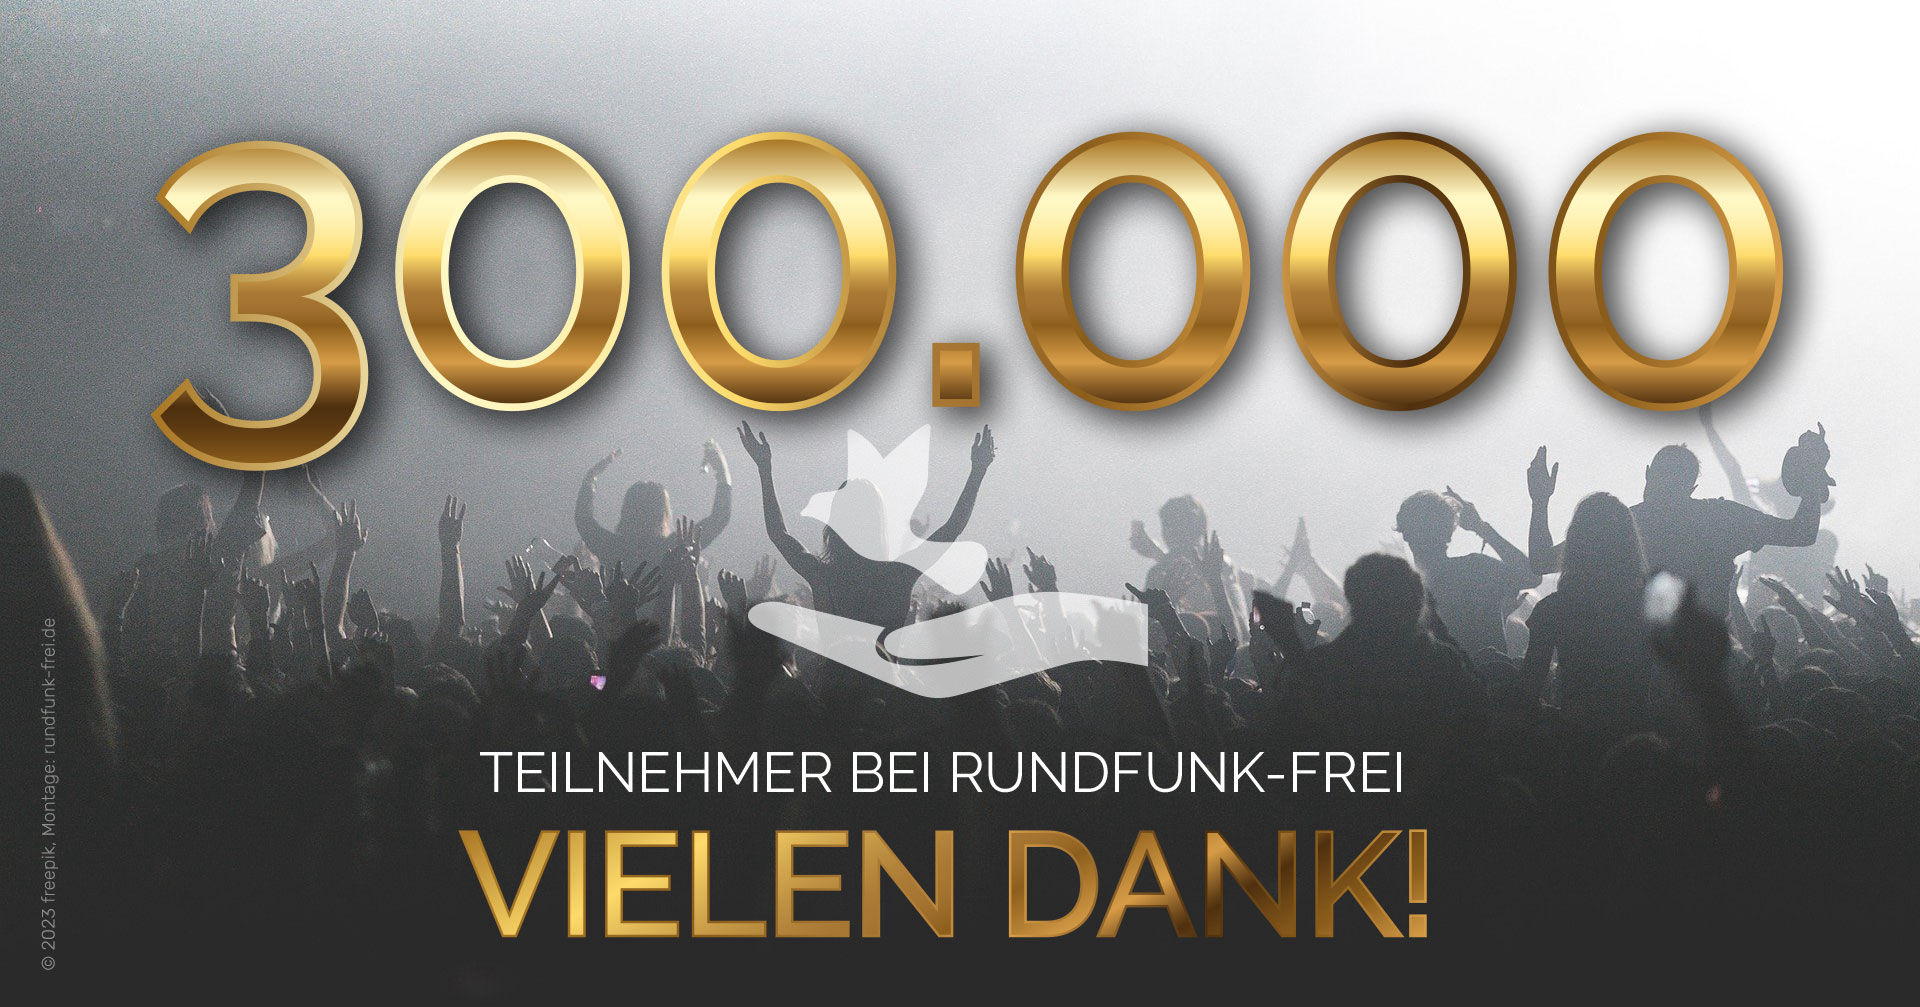 300.000 Teilnehmer bei rundfunk-frei.de - Vielen Dank